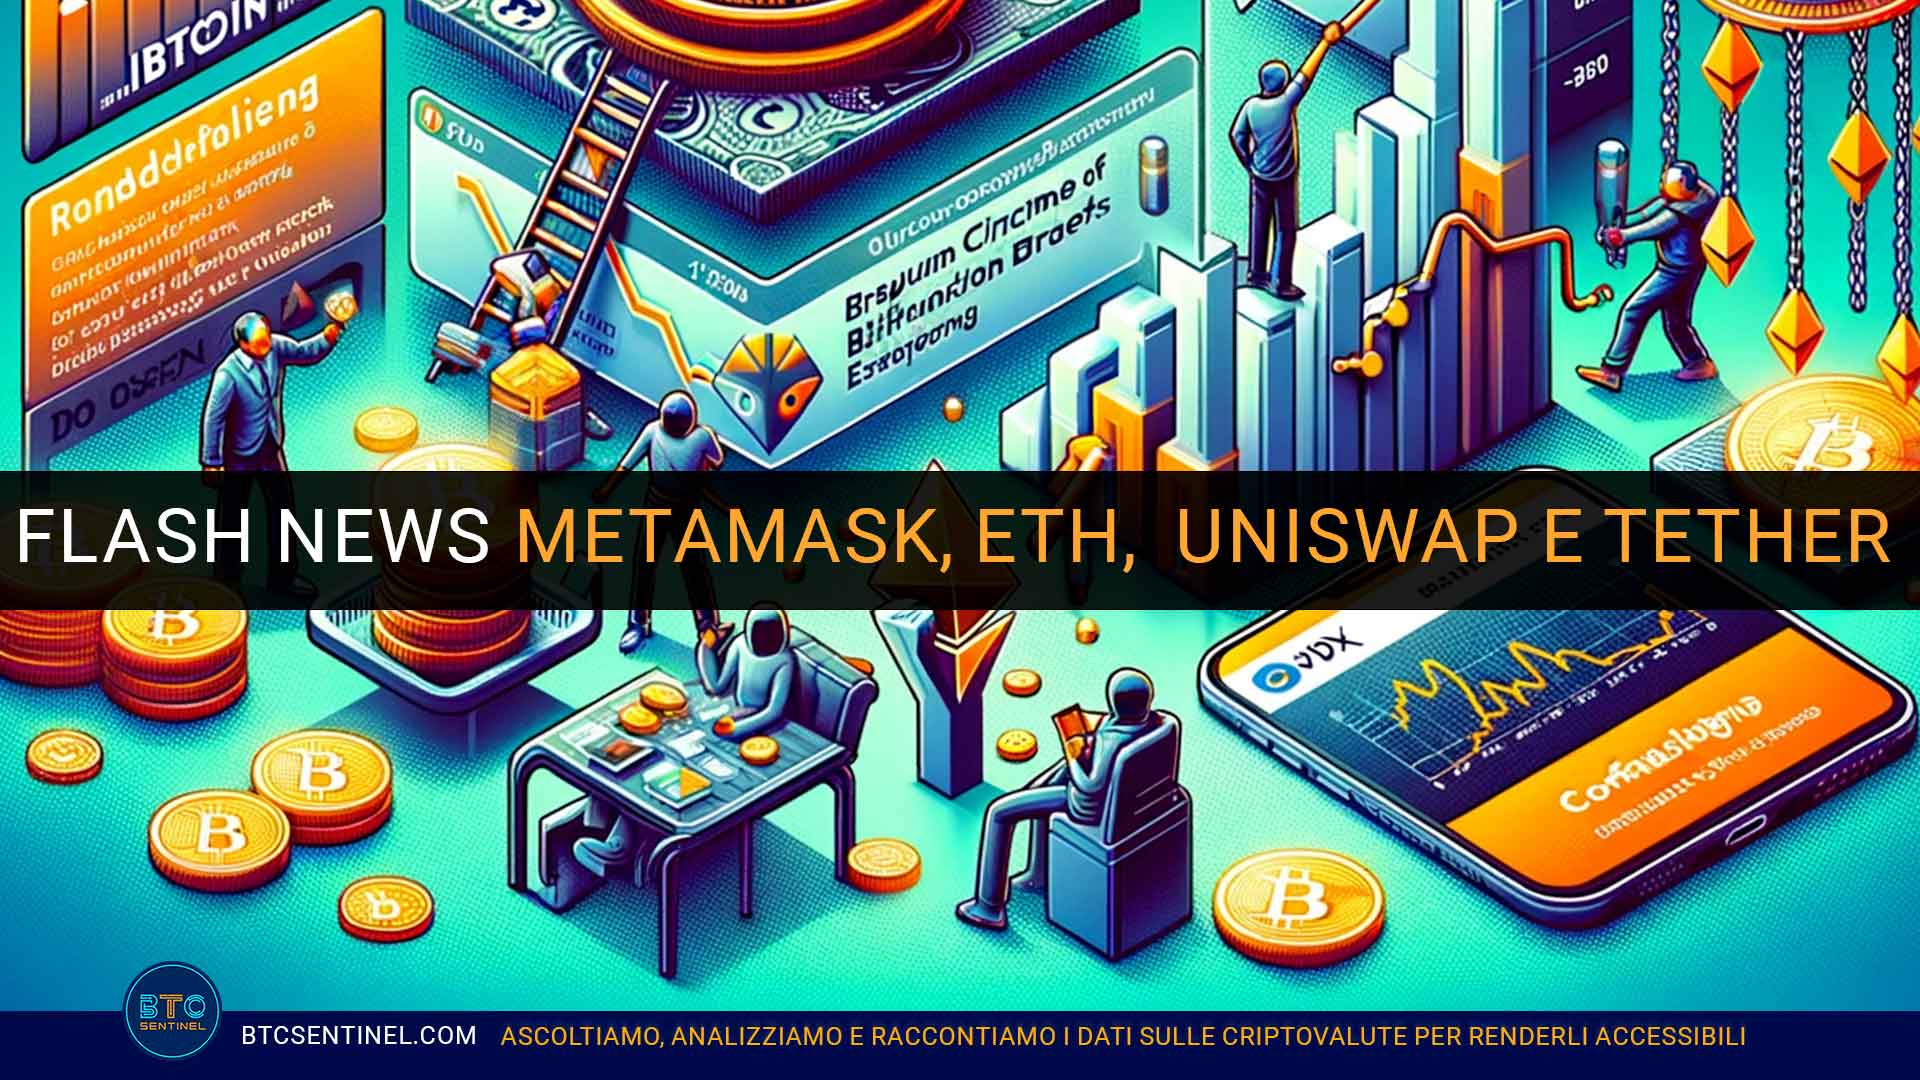 Flash news su Metamask, Ethereum,  Uniswap e Tether